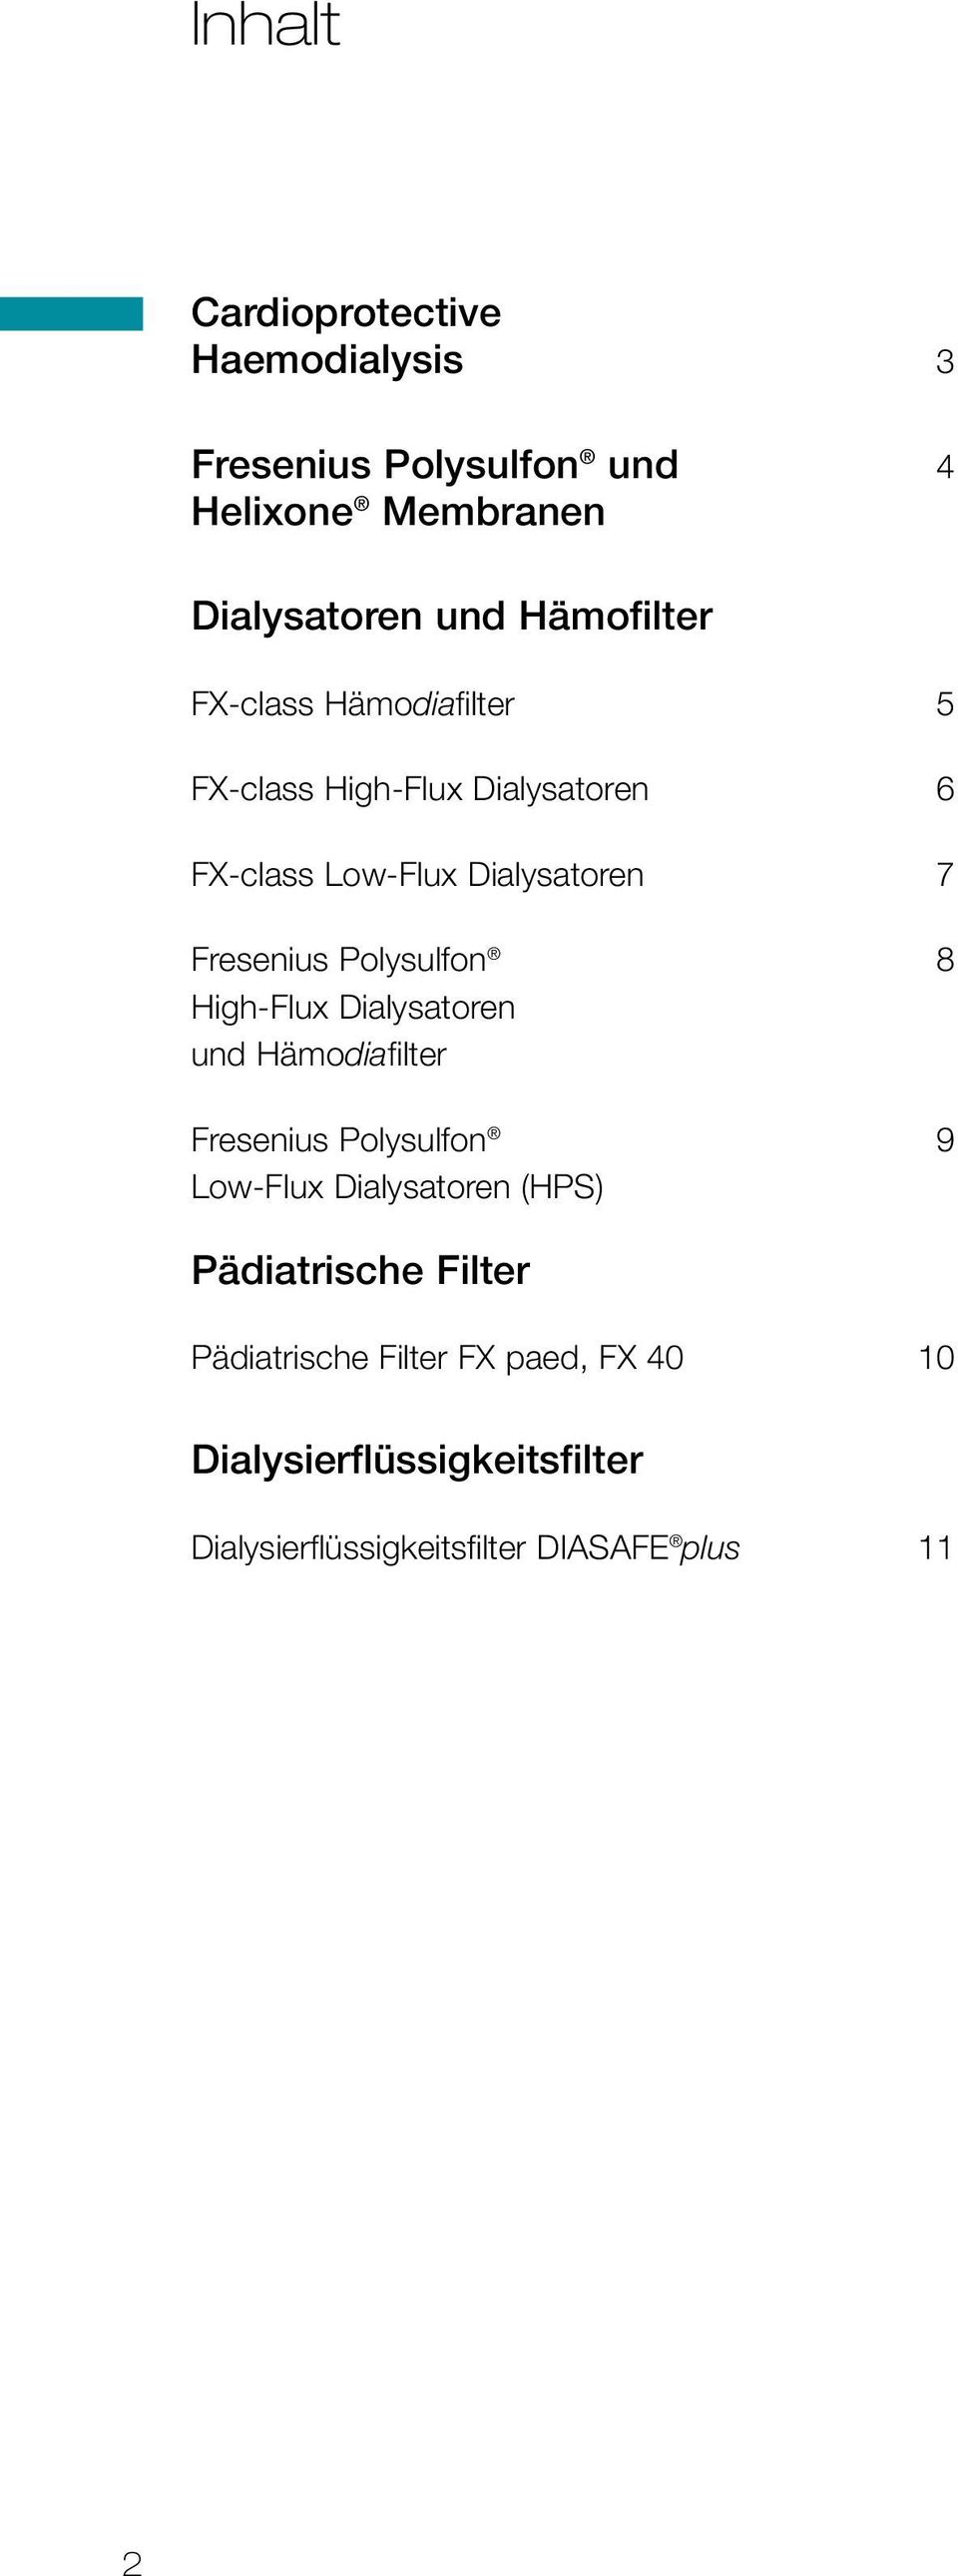 Polysulfon 8 High-Flux Dialysatoren und Hämodiafilter Fresenius Polysulfon 9 Low-Flux Dialysatoren (HPS)